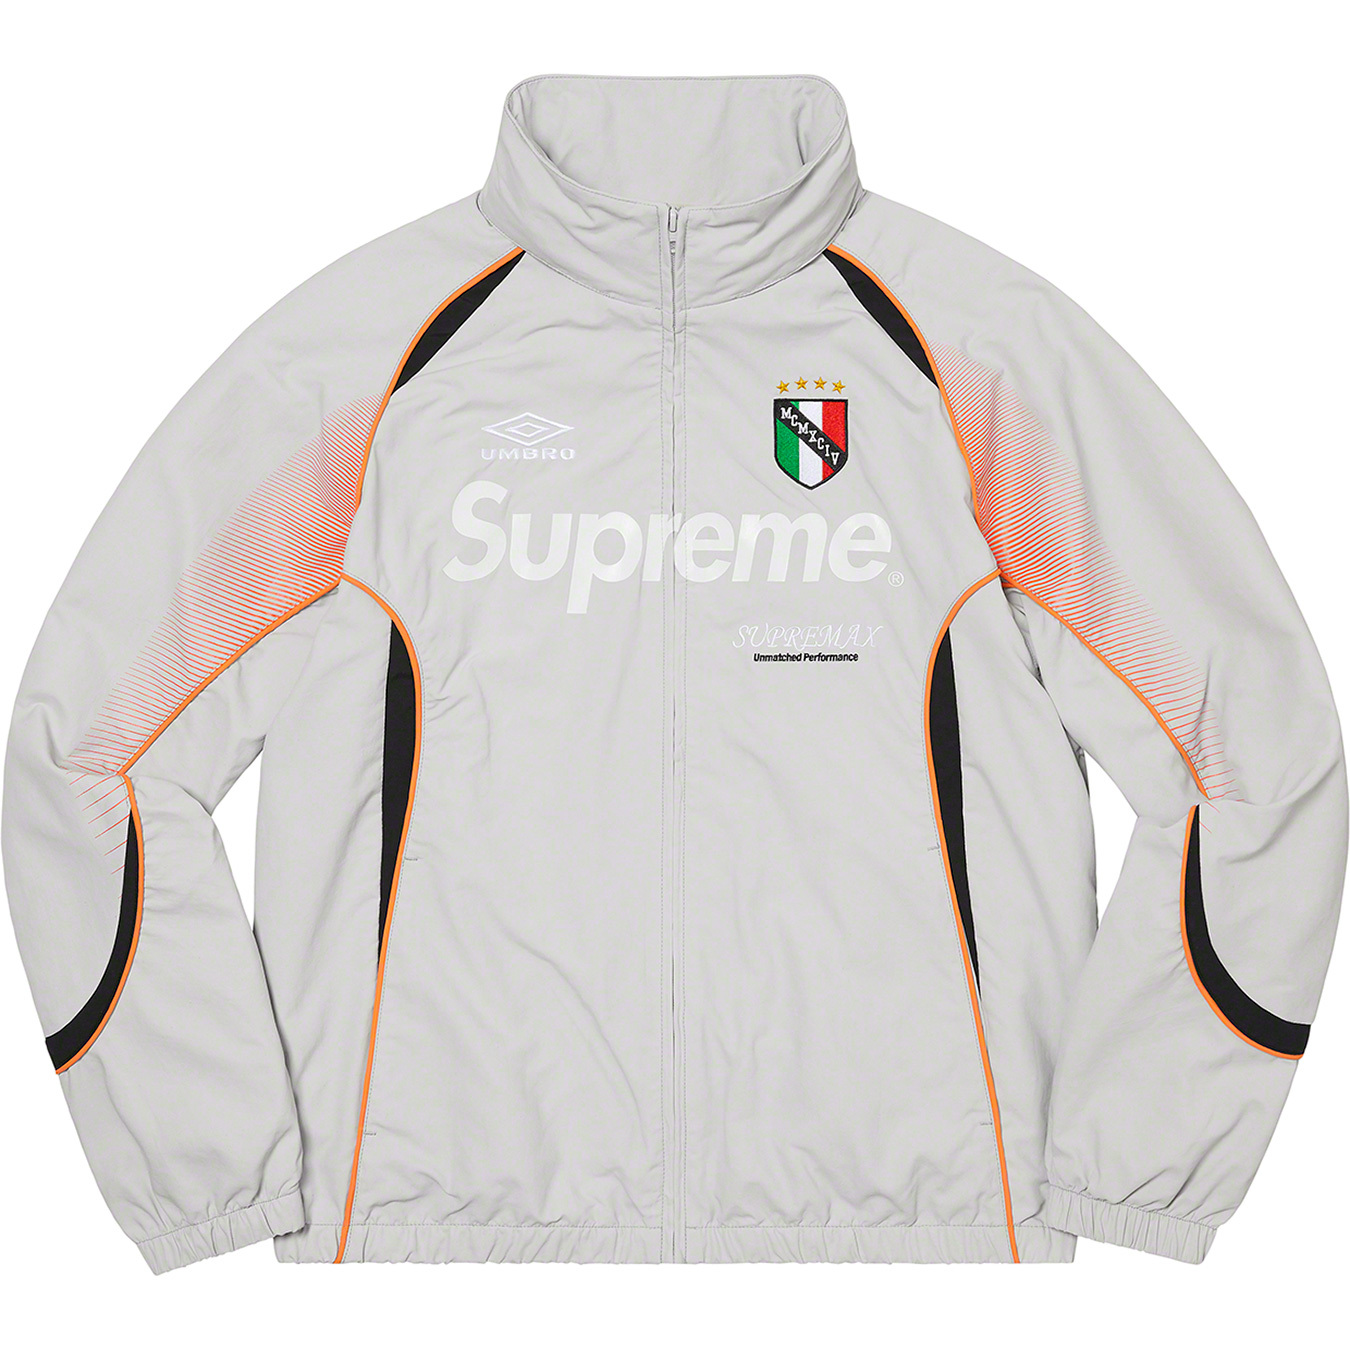 Supreme®/Umbro® Track Jacket | Supreme 22ss